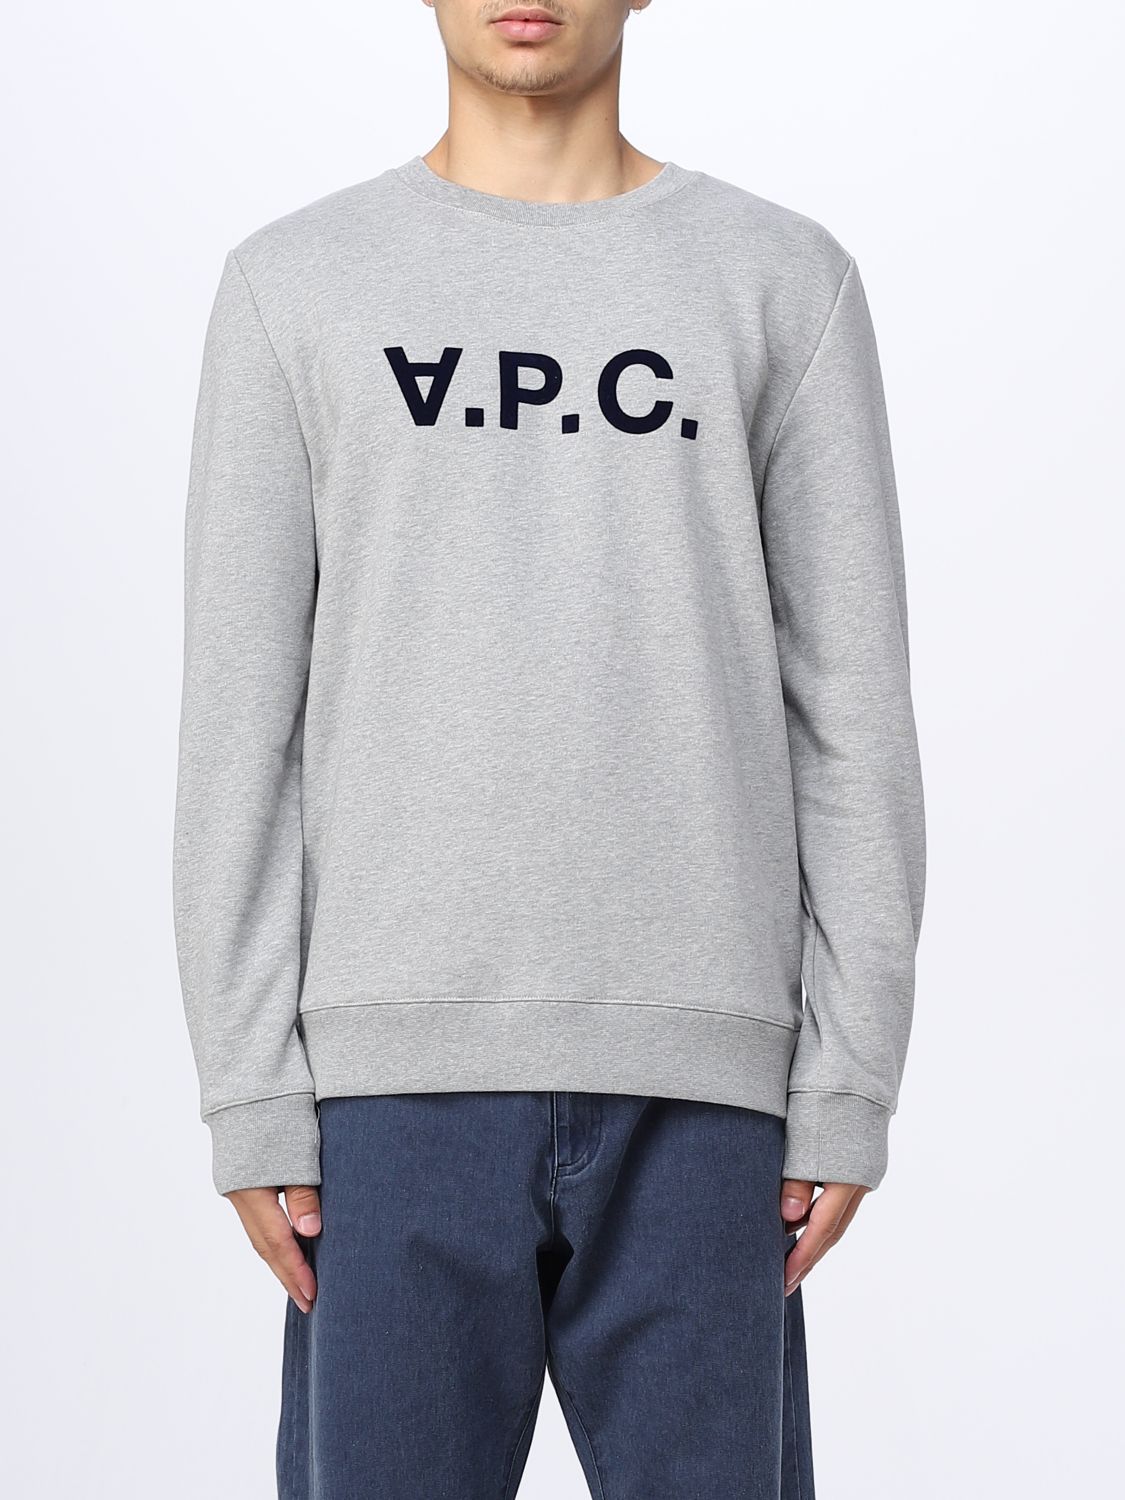 Shop Apc Sweatshirt A.p.c. Men Color Grey